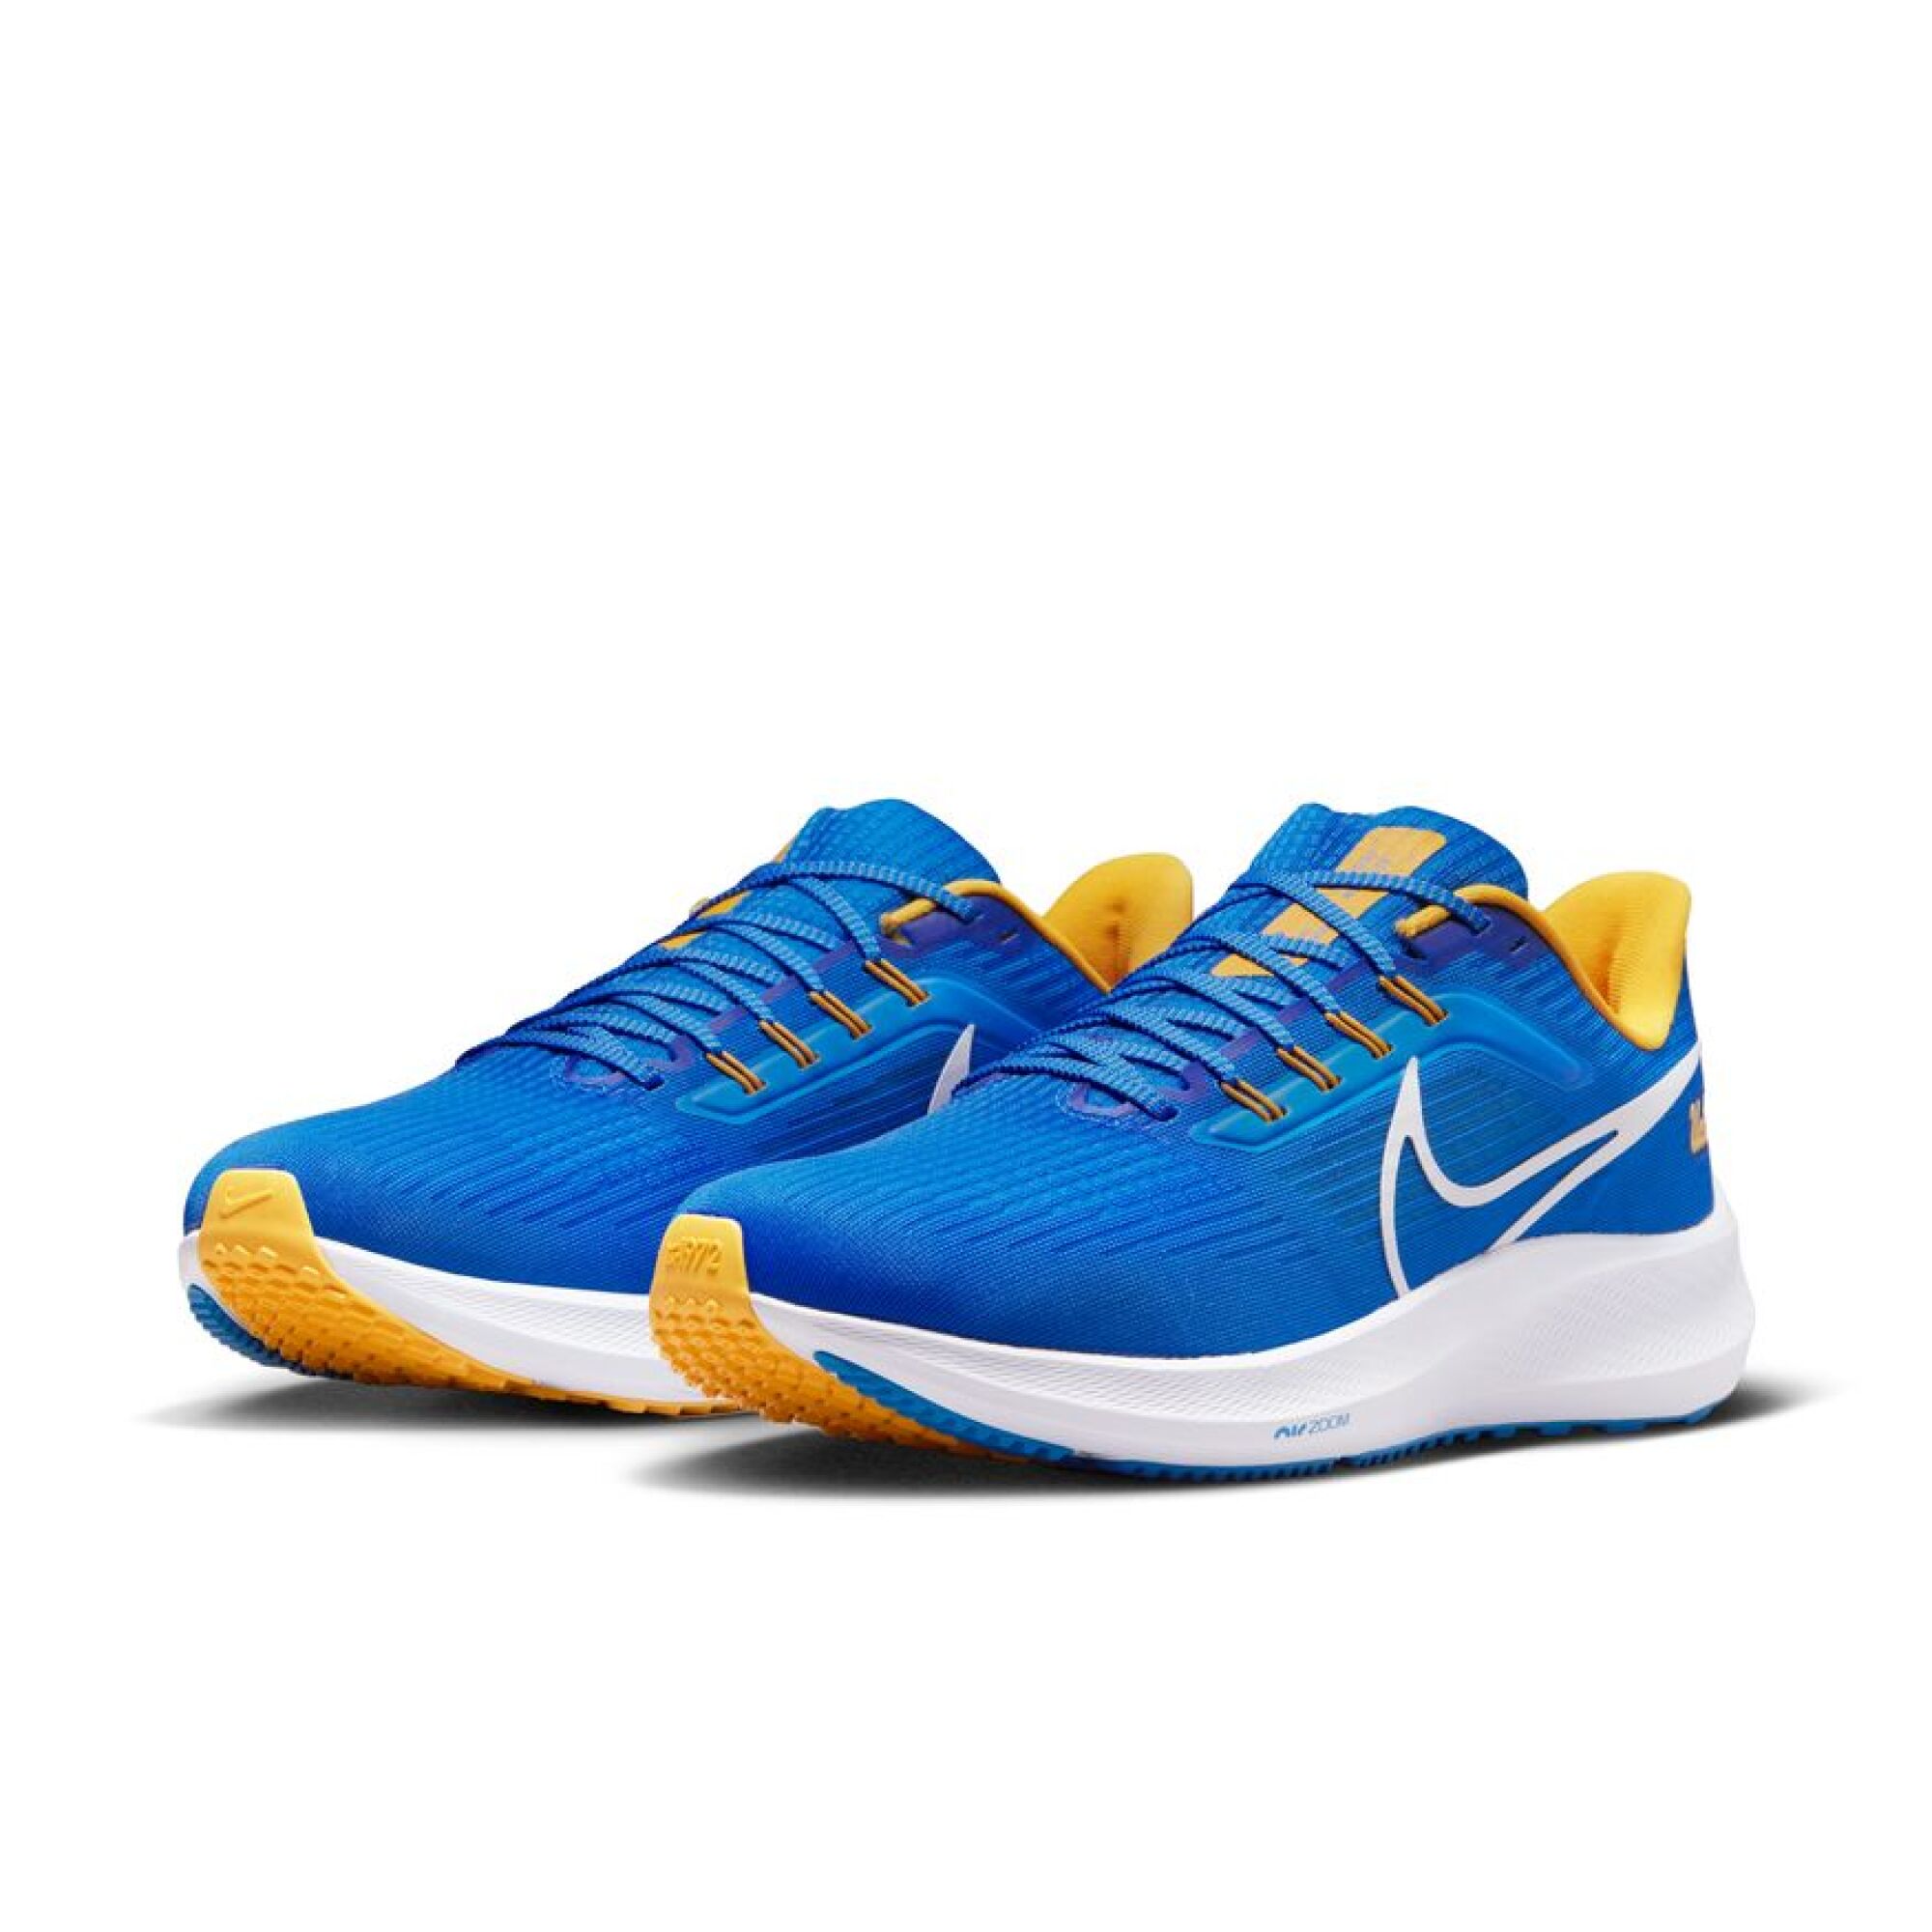 A pair of blue Nike sneakers